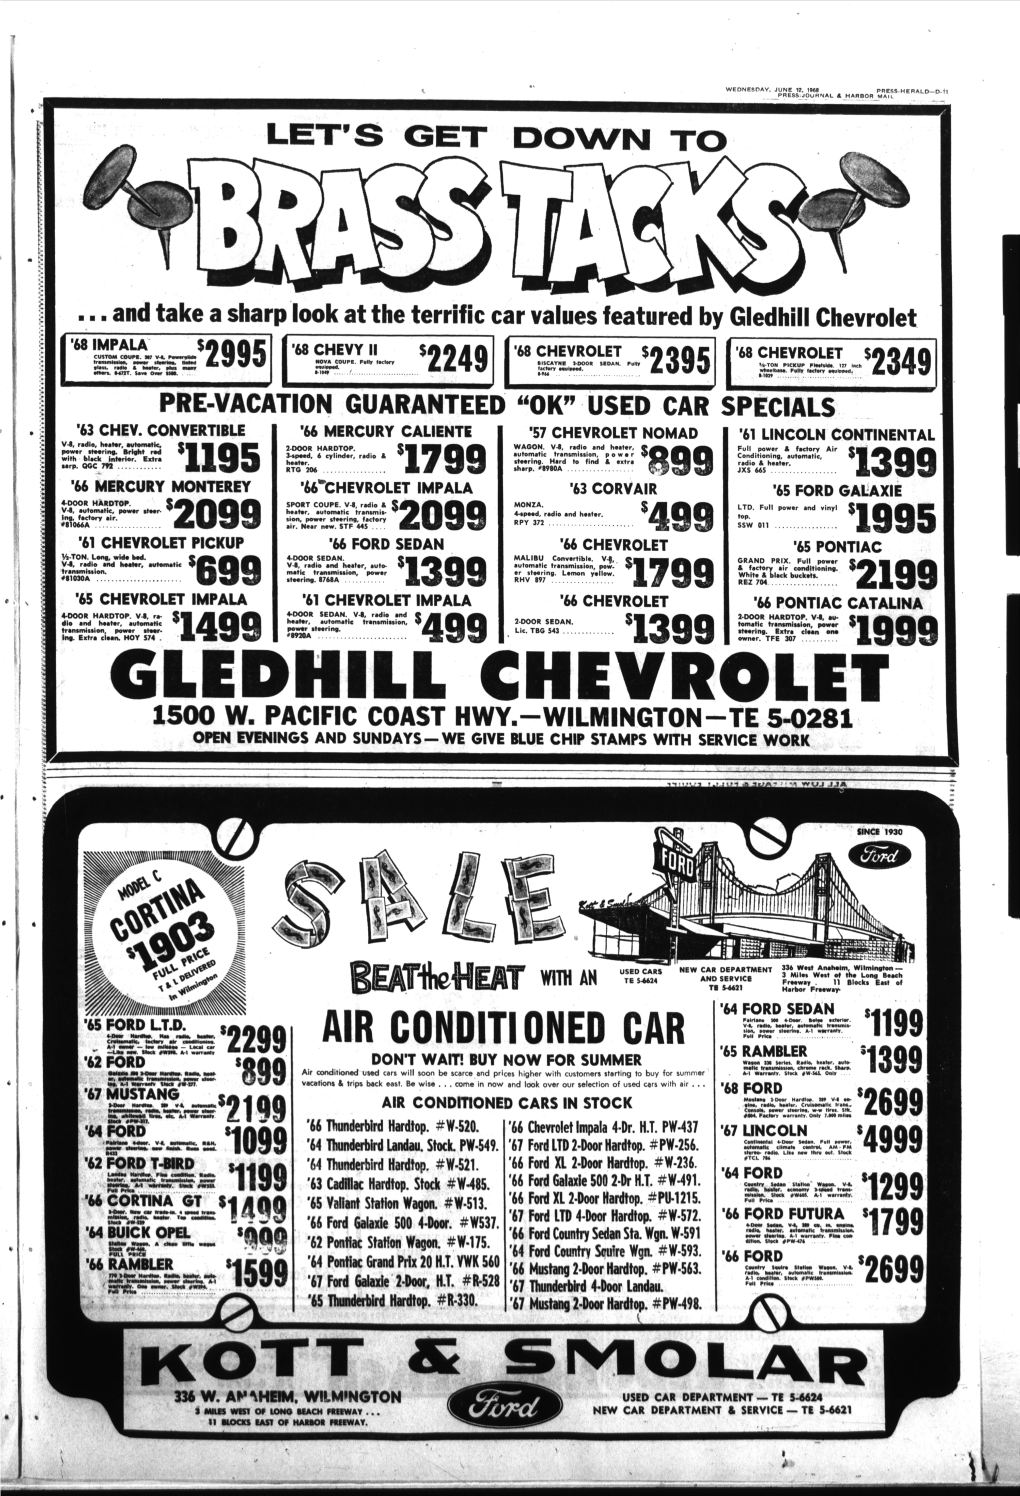 Gledhill Chevrolet '68 IMPALA CUSTOM Court, Ta Y-T, '68 CHEVY II '68 CHEVROLET $ '68 CHEVROLET $ Traittmittlail, Aaw NOVA COUPE